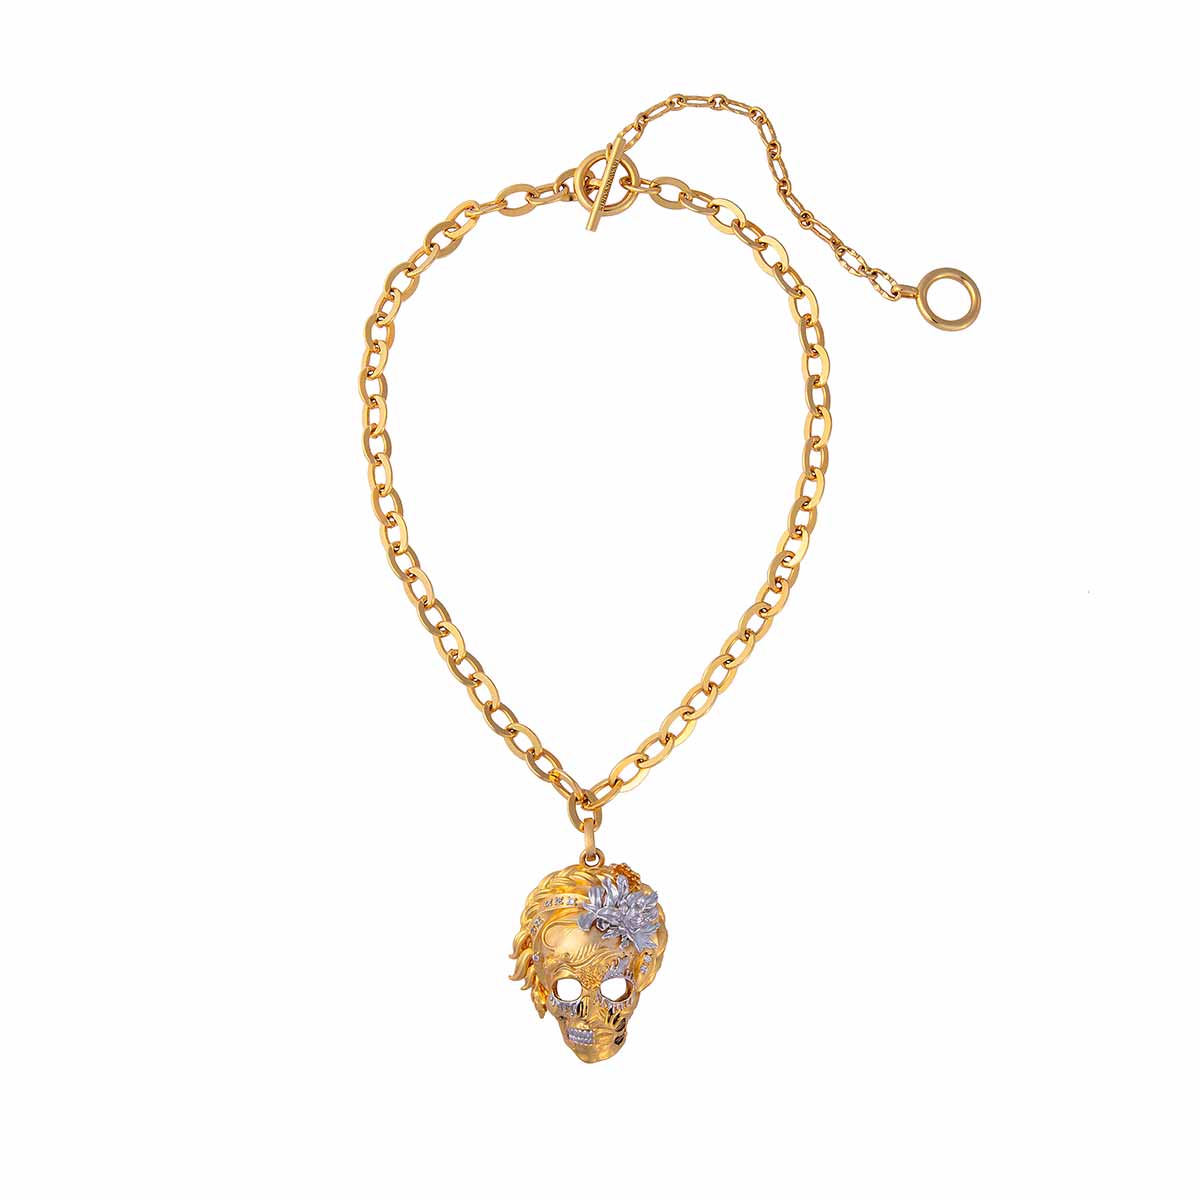 Necklace with Calavera Pendant